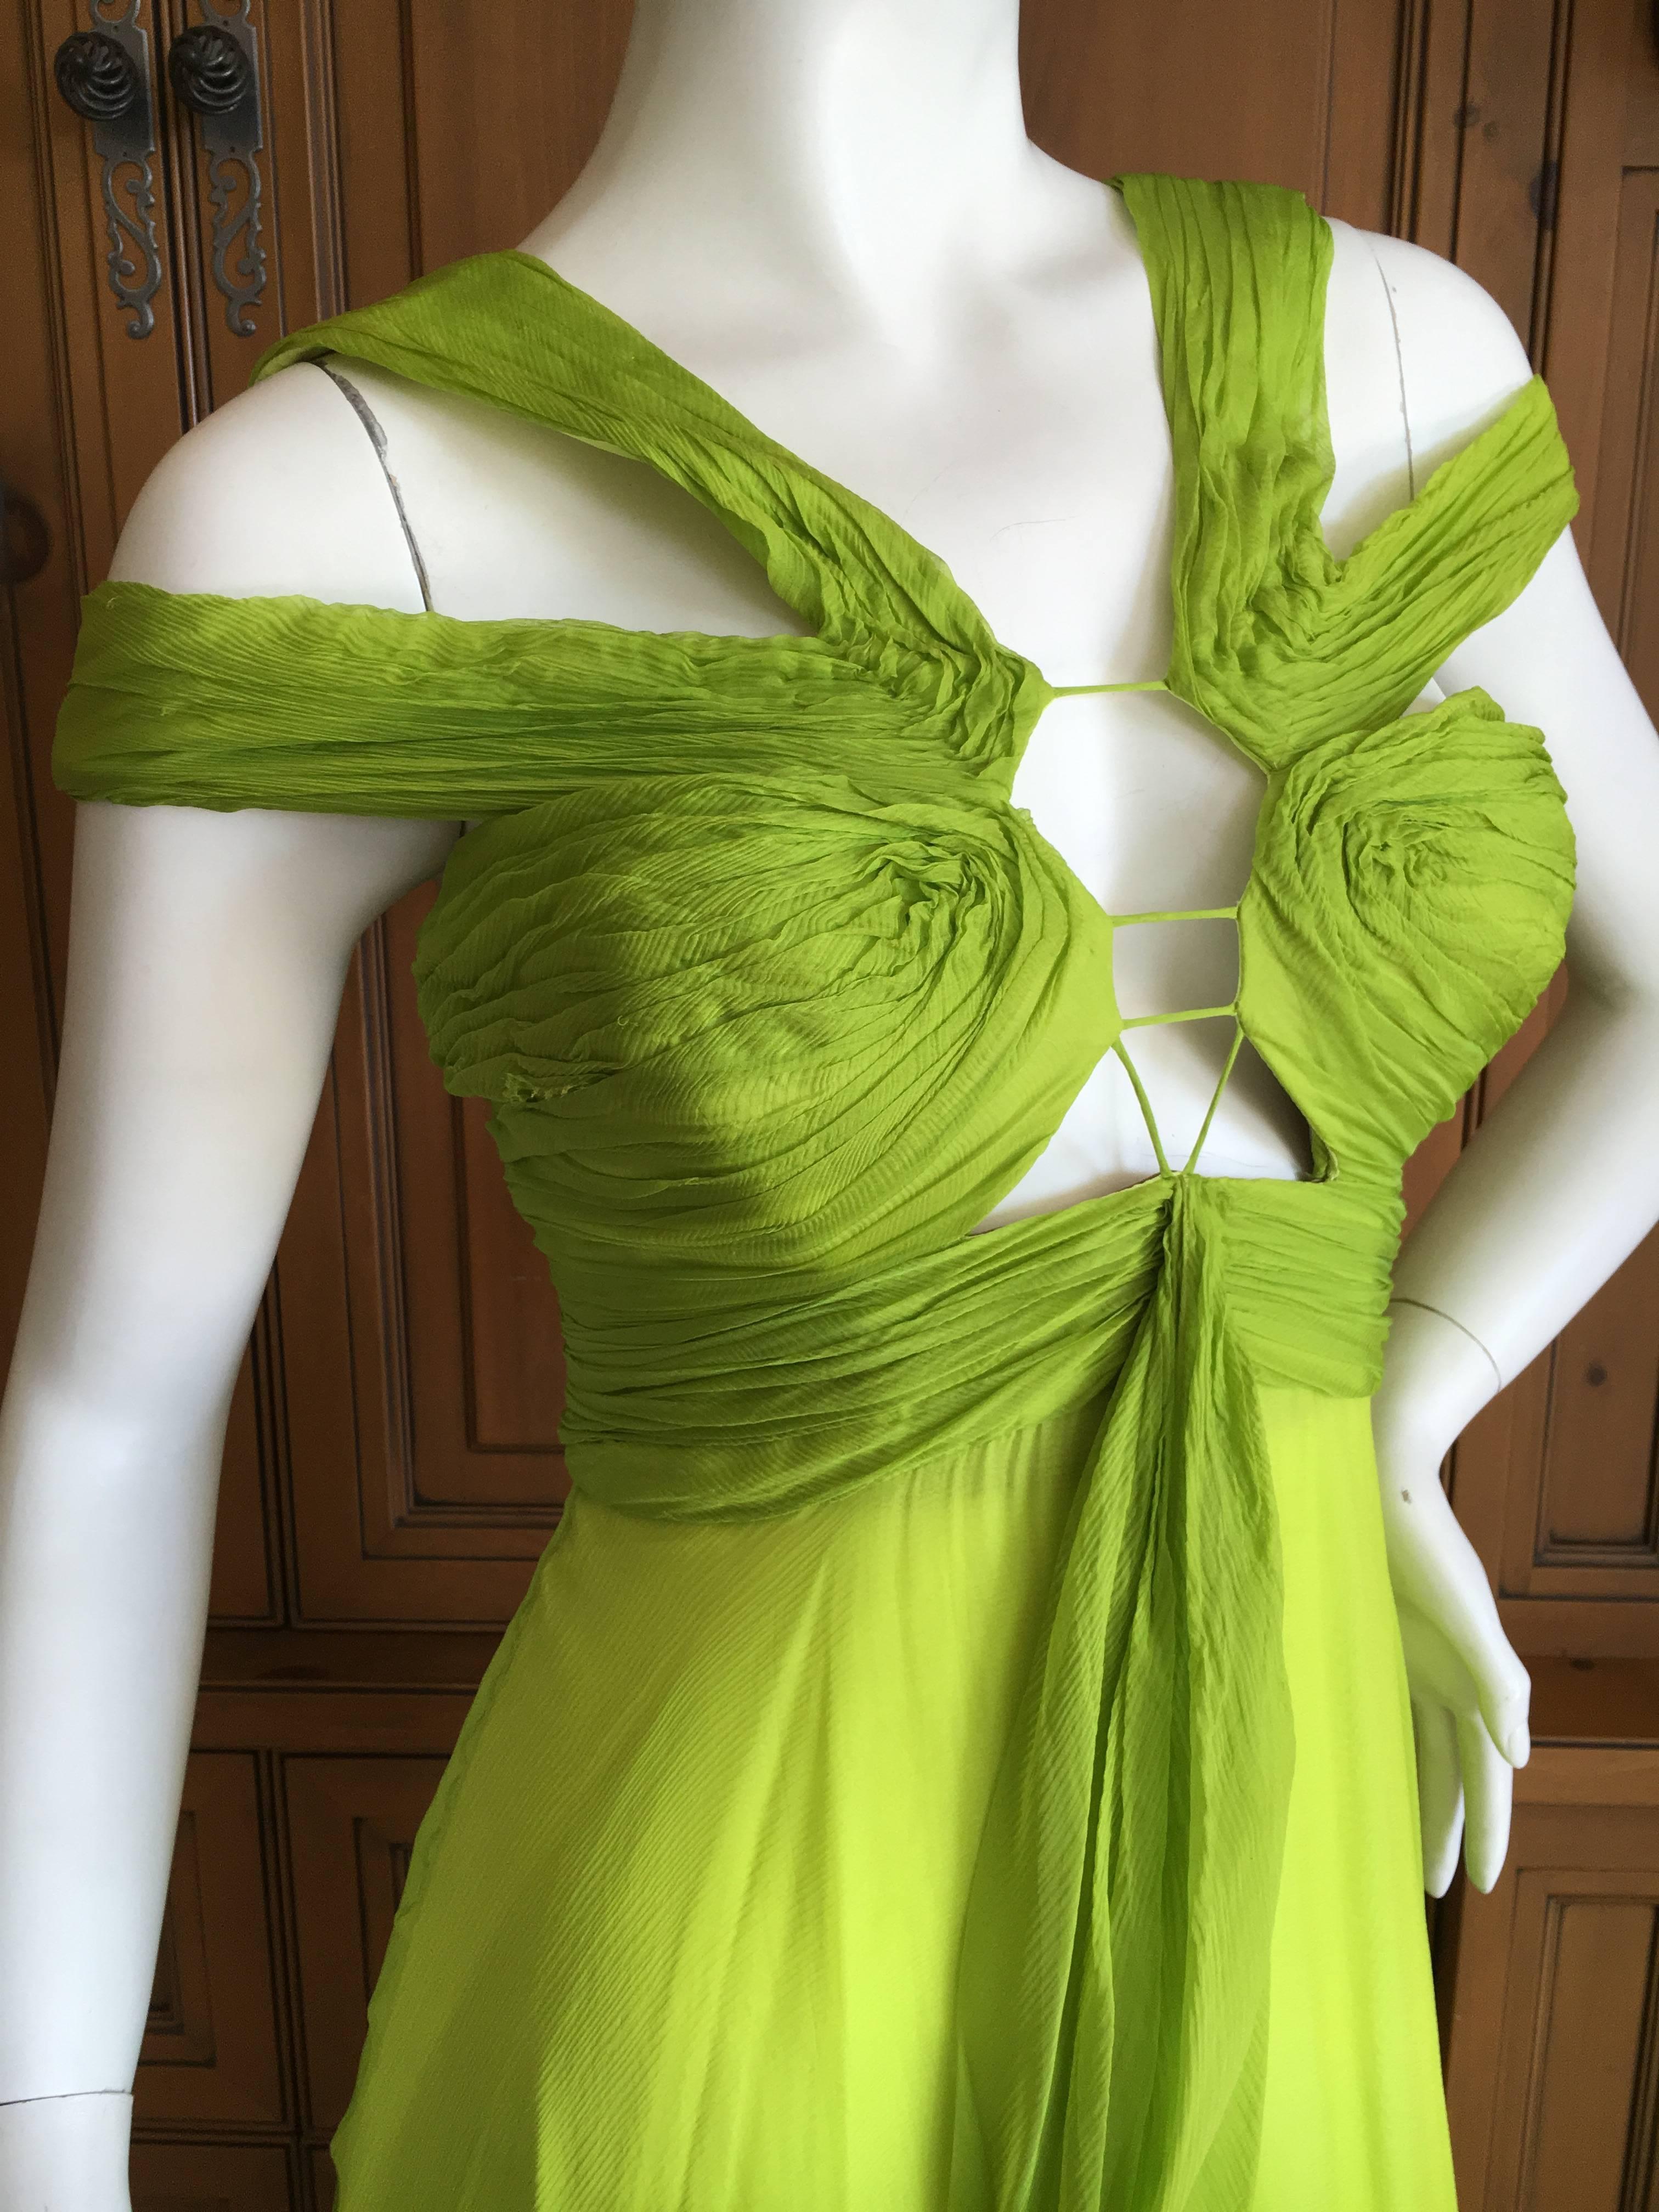 Beautiful neon green silk chiffon dress by Peter Dundas for Ungaro.
Size Small
Bust 36